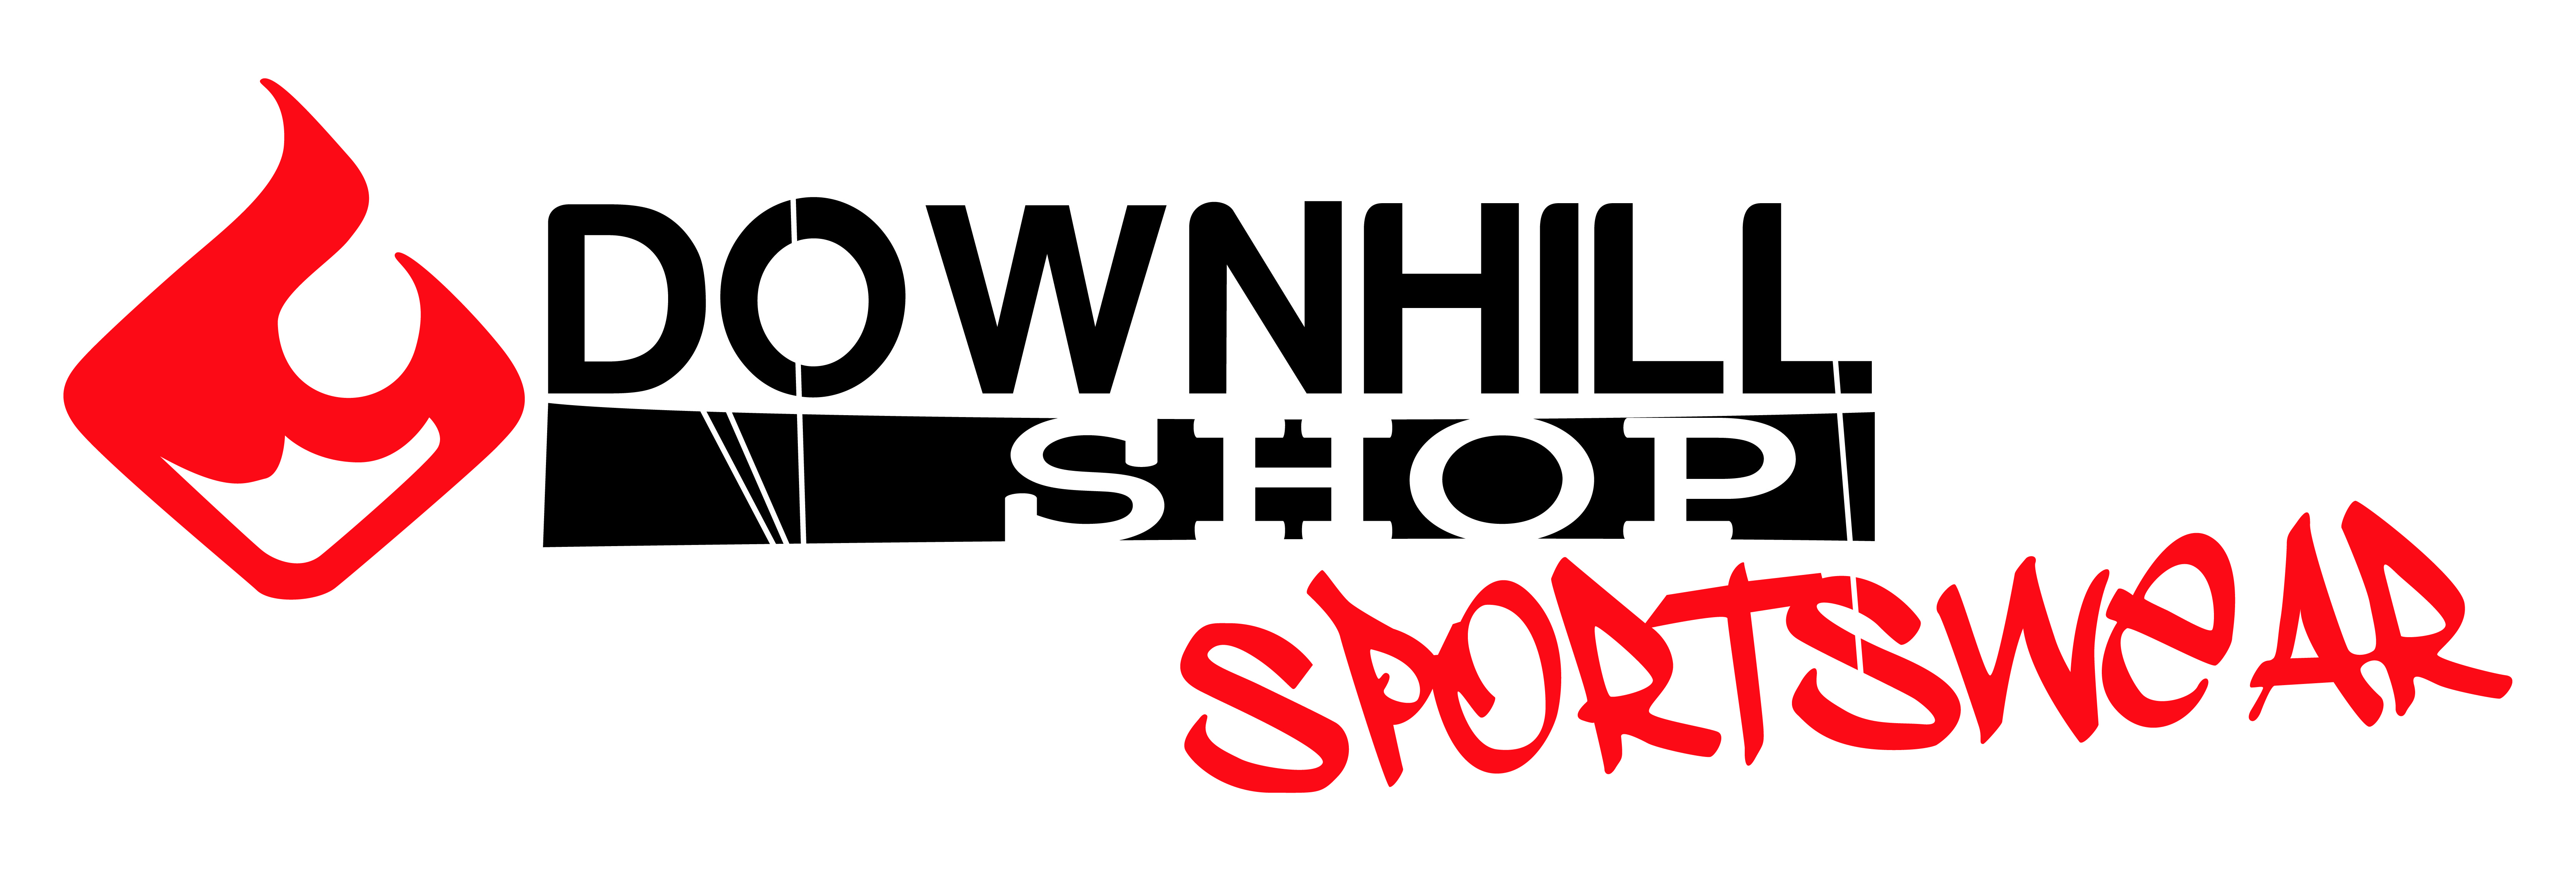 Downhill shop